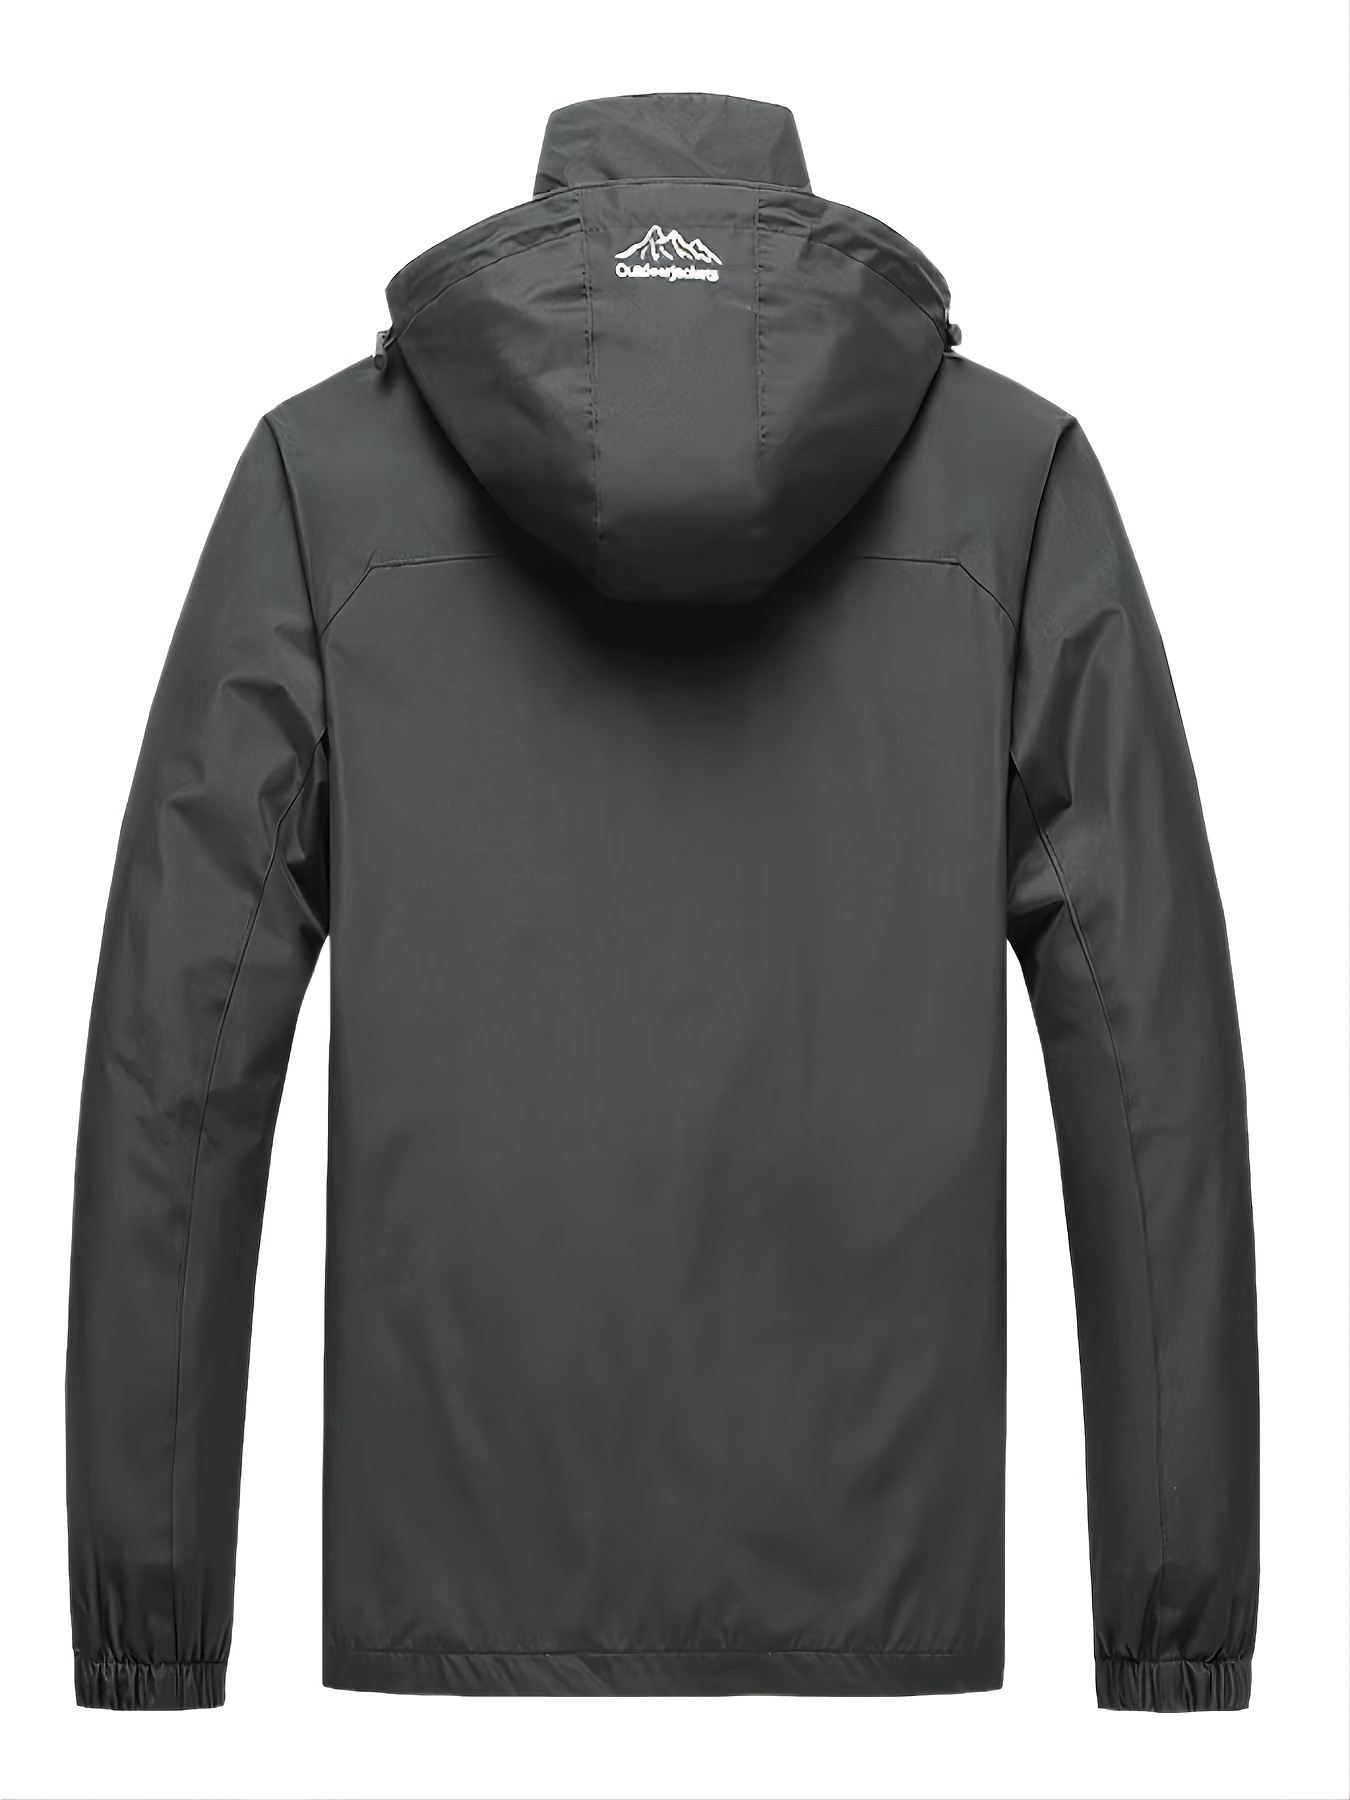 mens waterproof rain jacket lightweight raincoat windbreaker with hood for hiking travel outdoor details 11